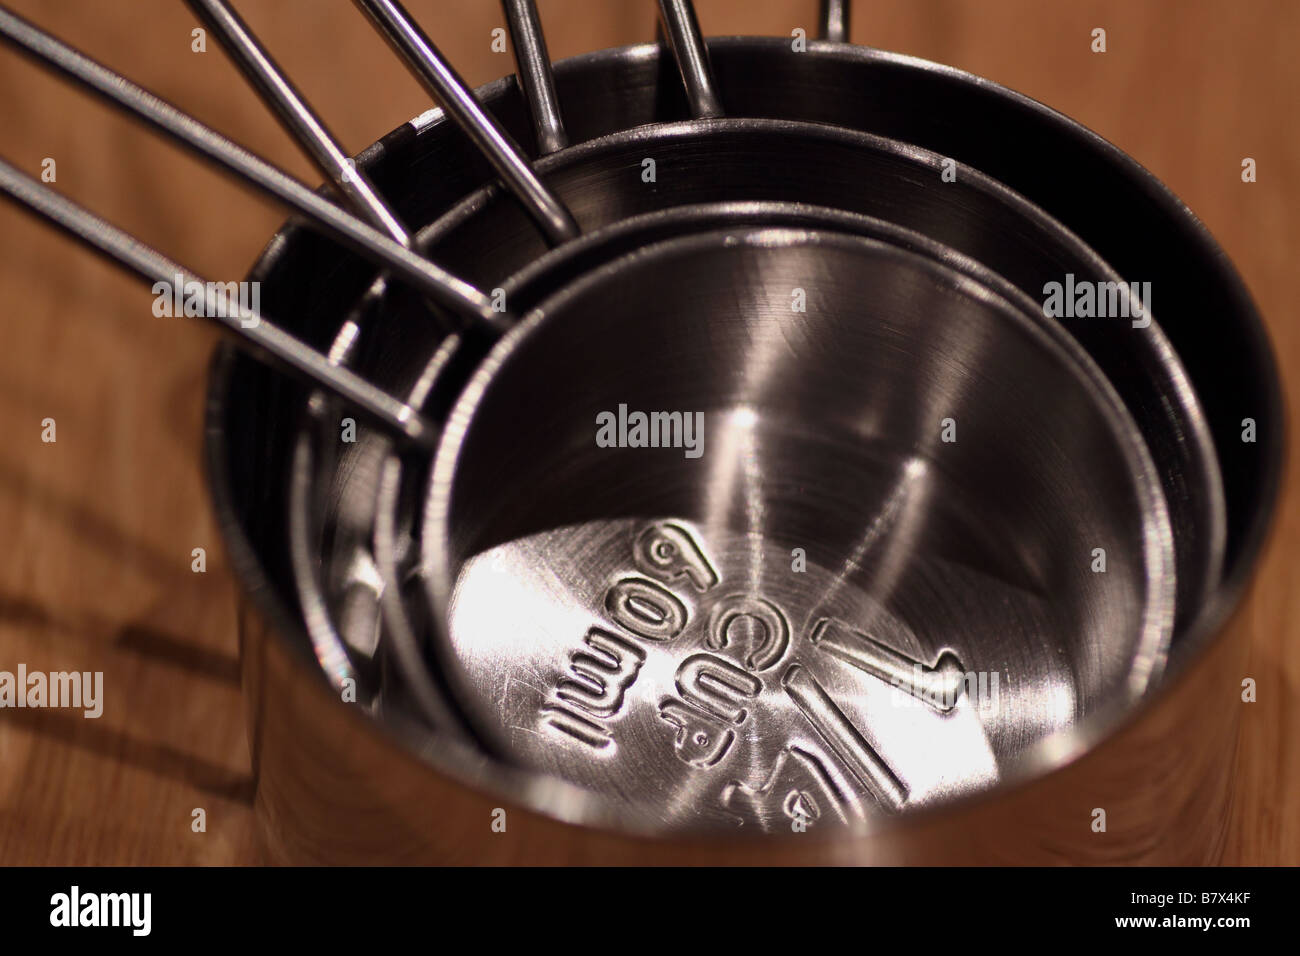 https://c8.alamy.com/comp/B7X4KF/a-set-of-kitchen-measuring-cups-B7X4KF.jpg